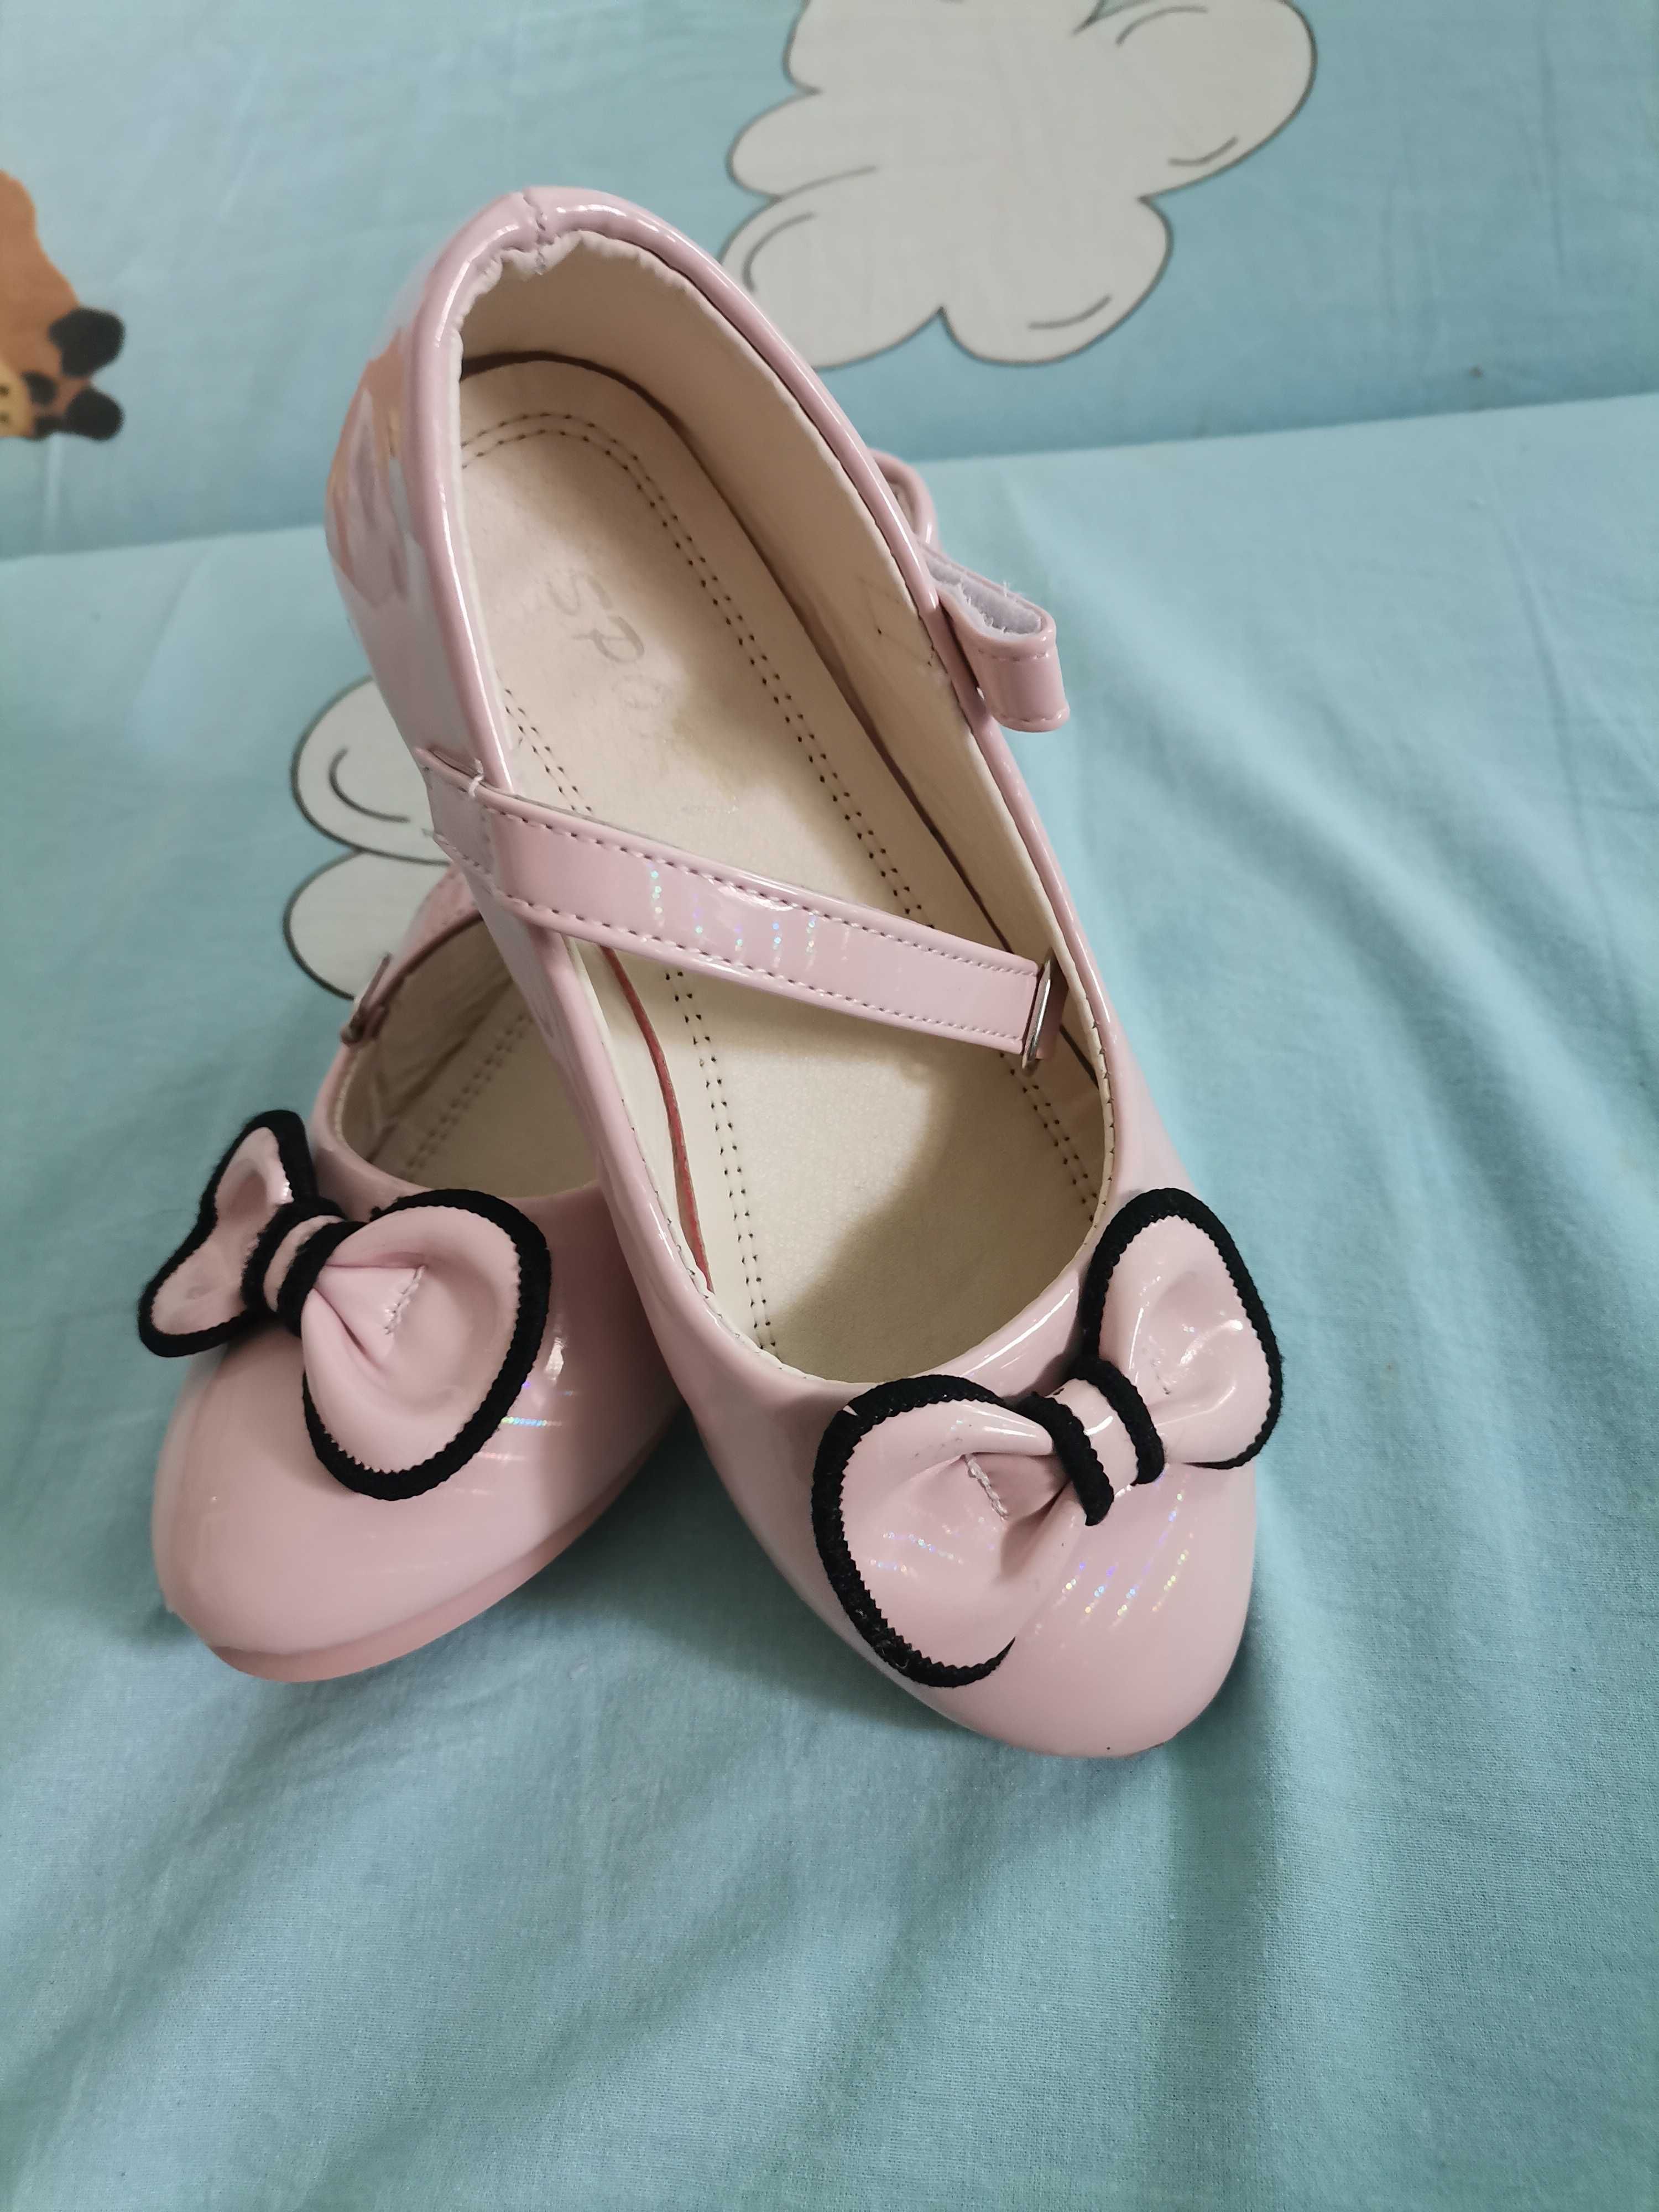 Pantofi fetițe roz